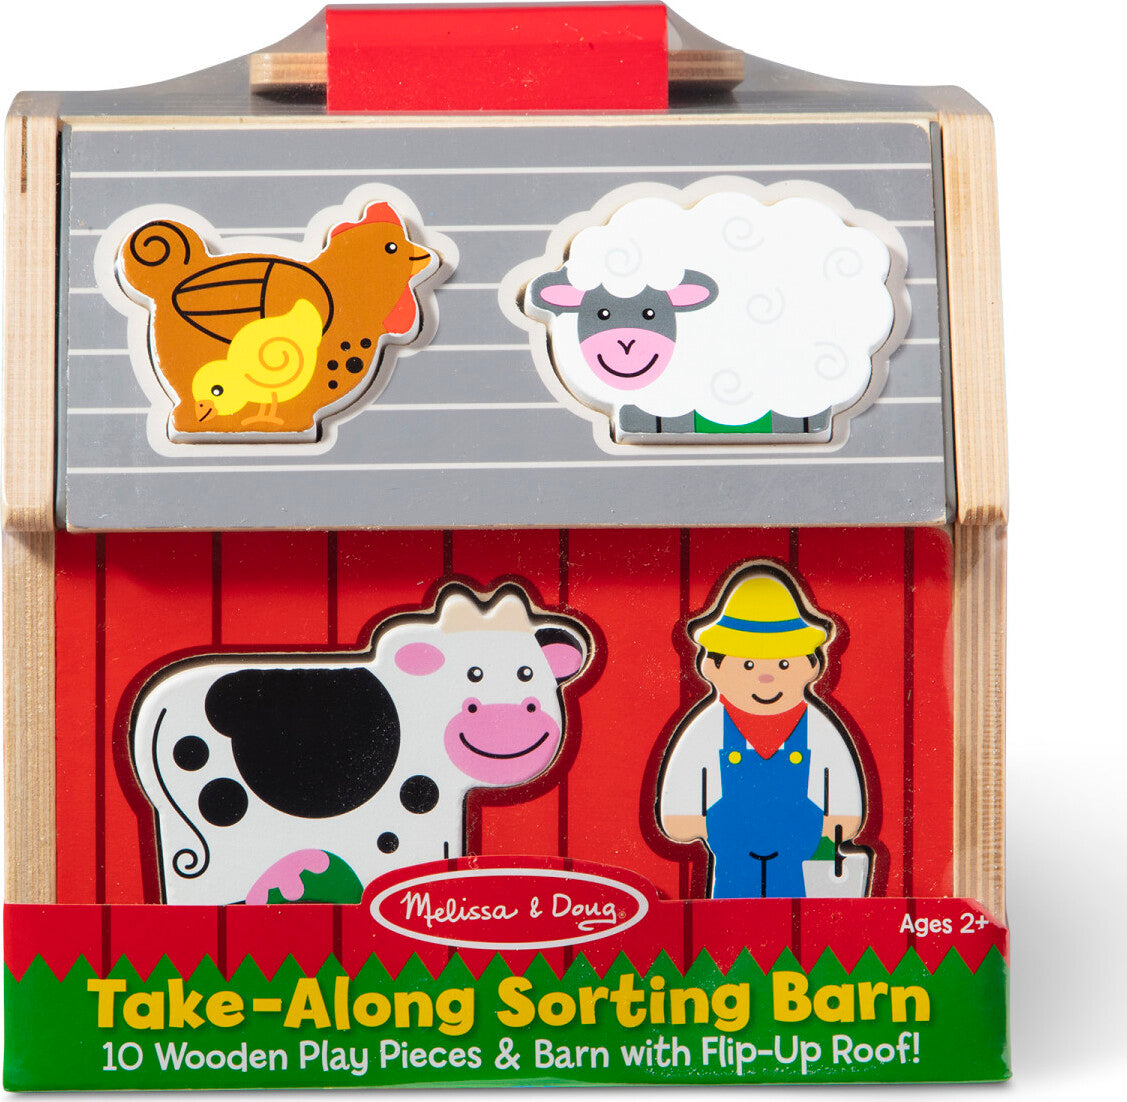 Take-Along Sorting Barn